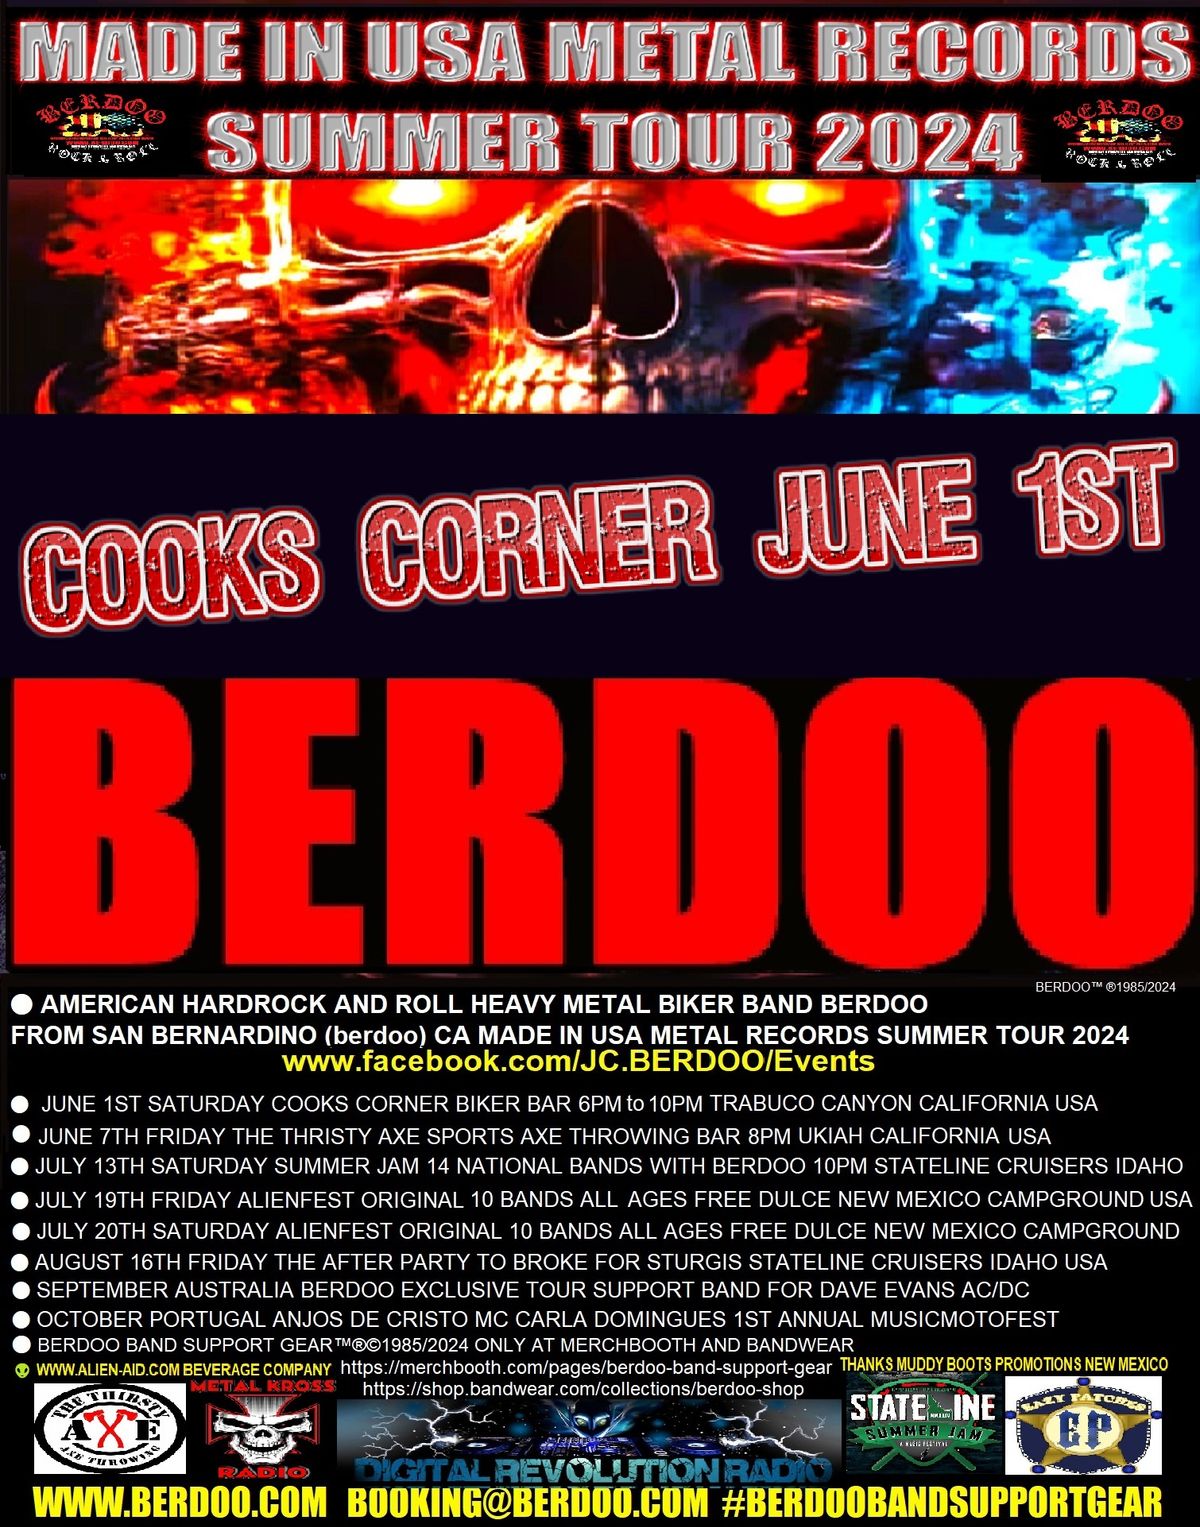 \ud83d\udd34BERDOO JUNE 1ST COOKS CORNER AMERICAN HARDROCK BIKER BAND BERDOO FROM SAN BERNARDINO CA 